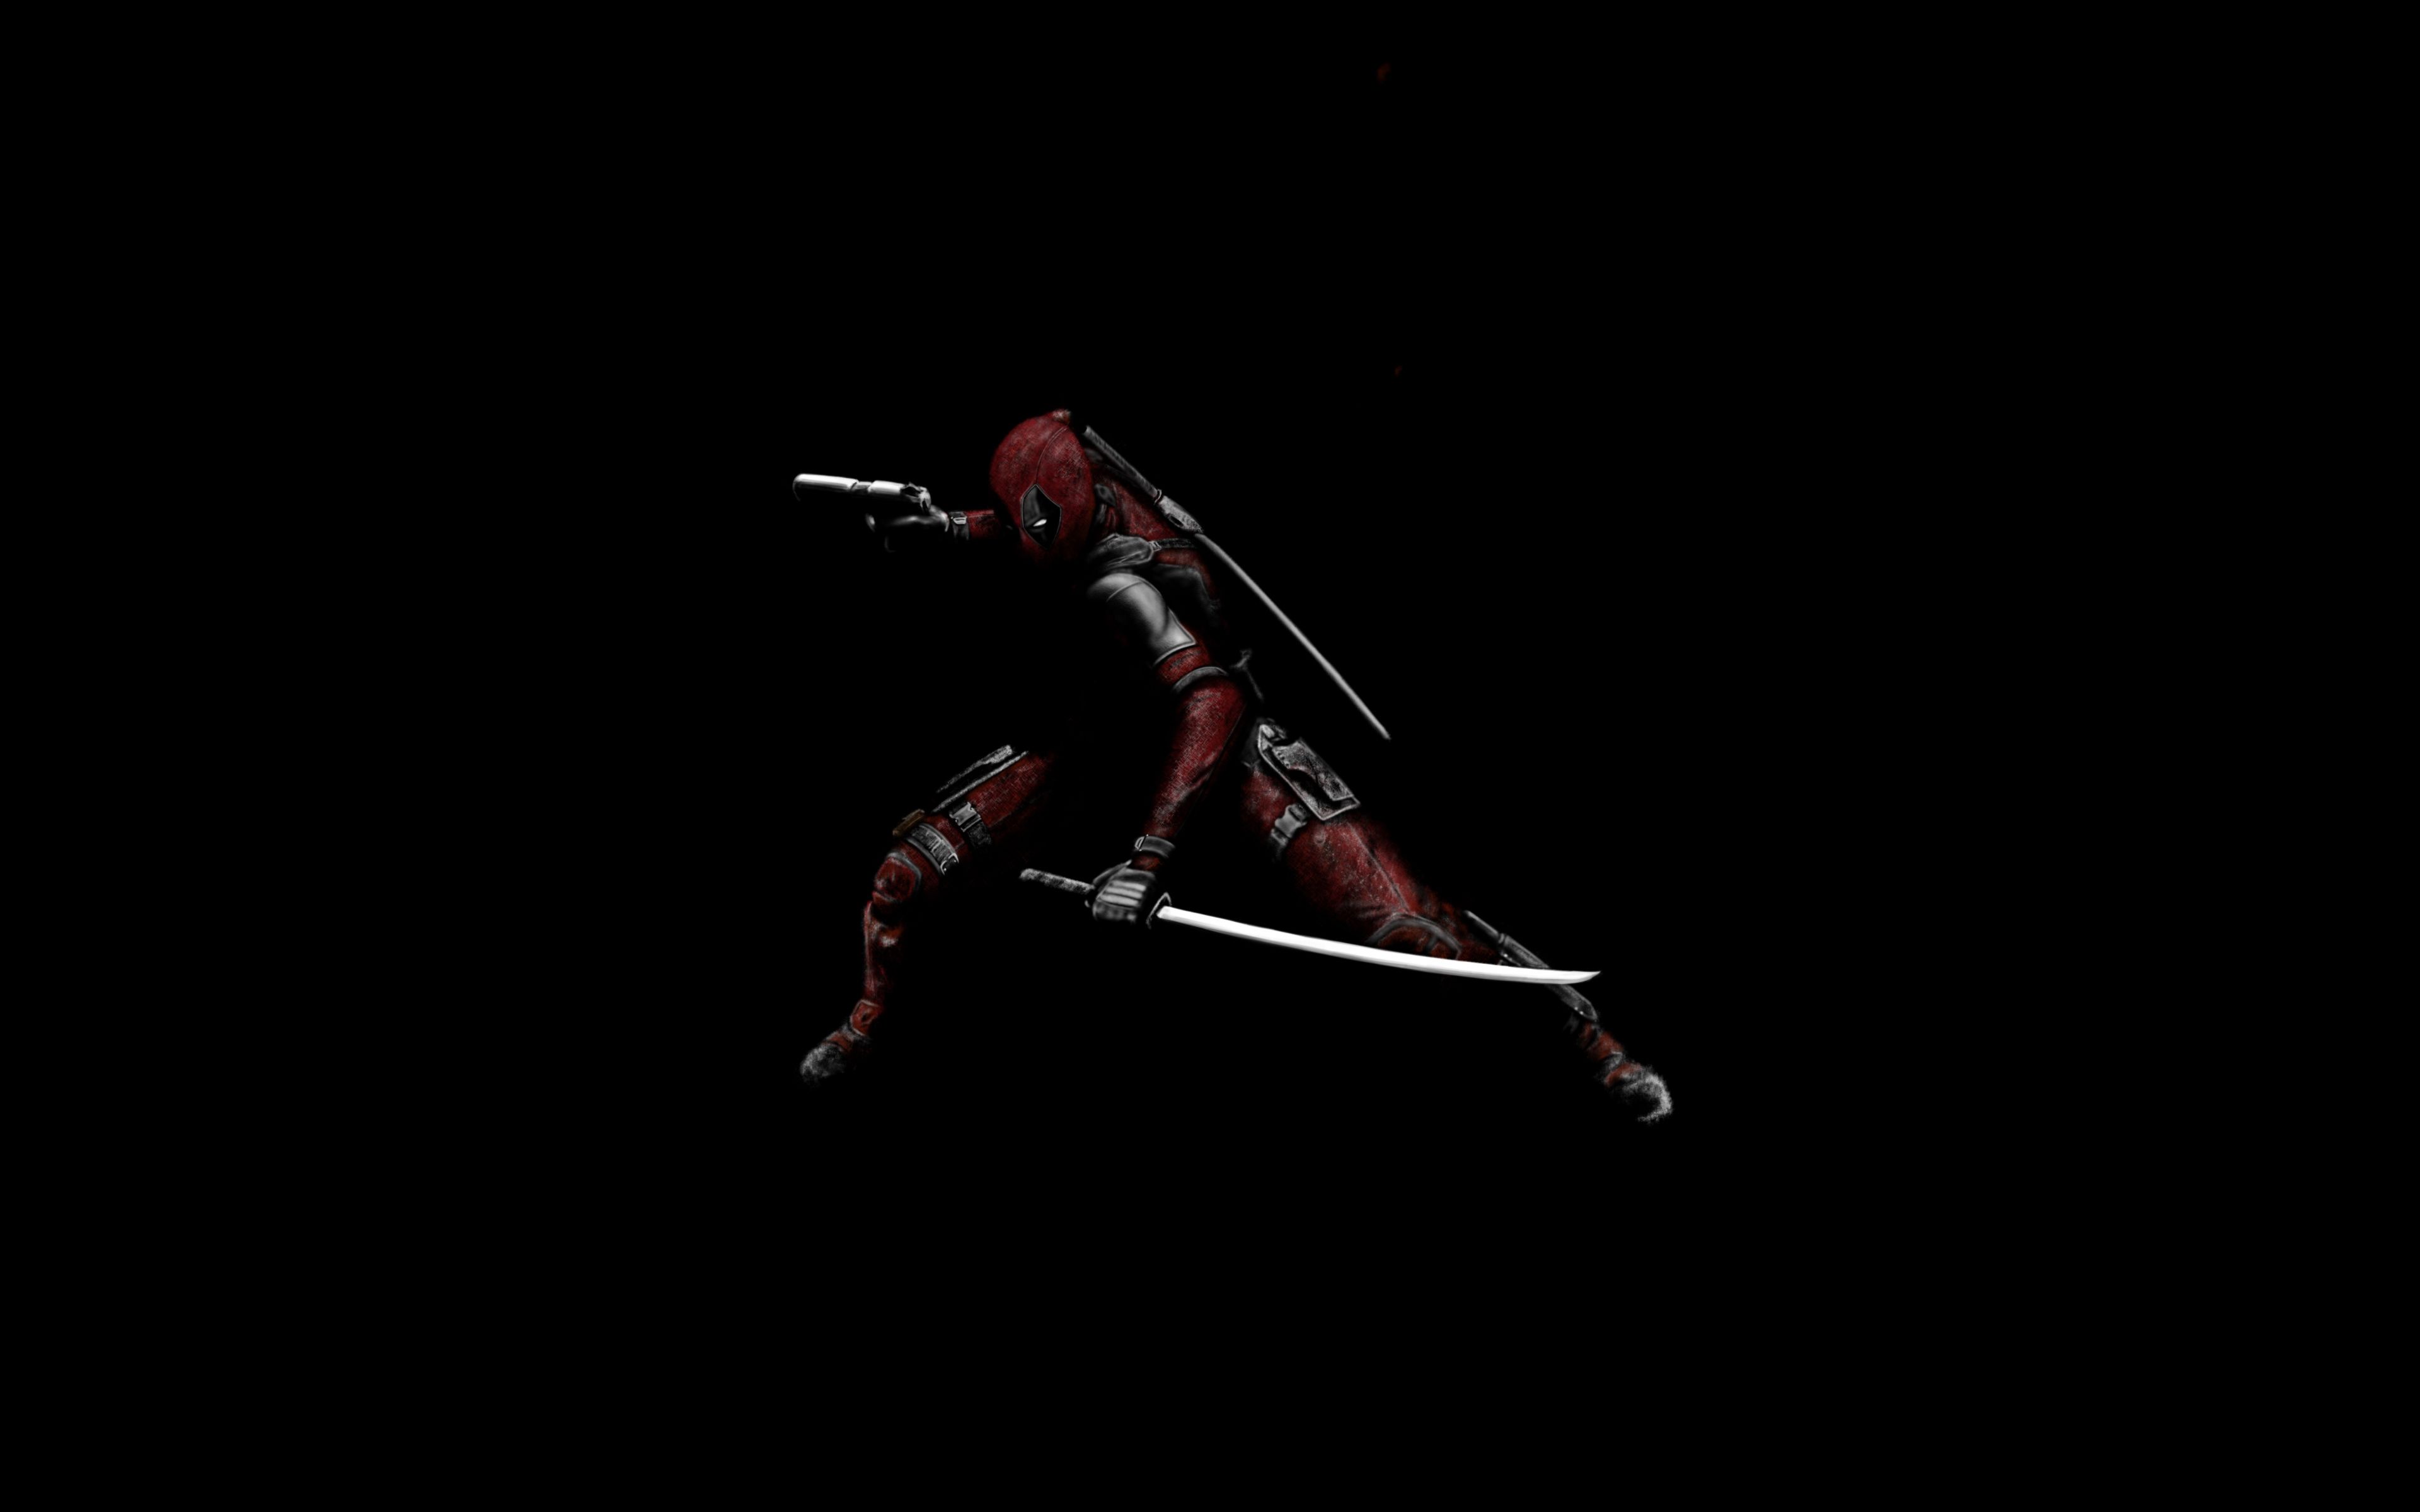 Download Deadpool with swords, minimal, superhero, dark, art wallpaper, 3840x 4K Ultra HD 16: Widescreen